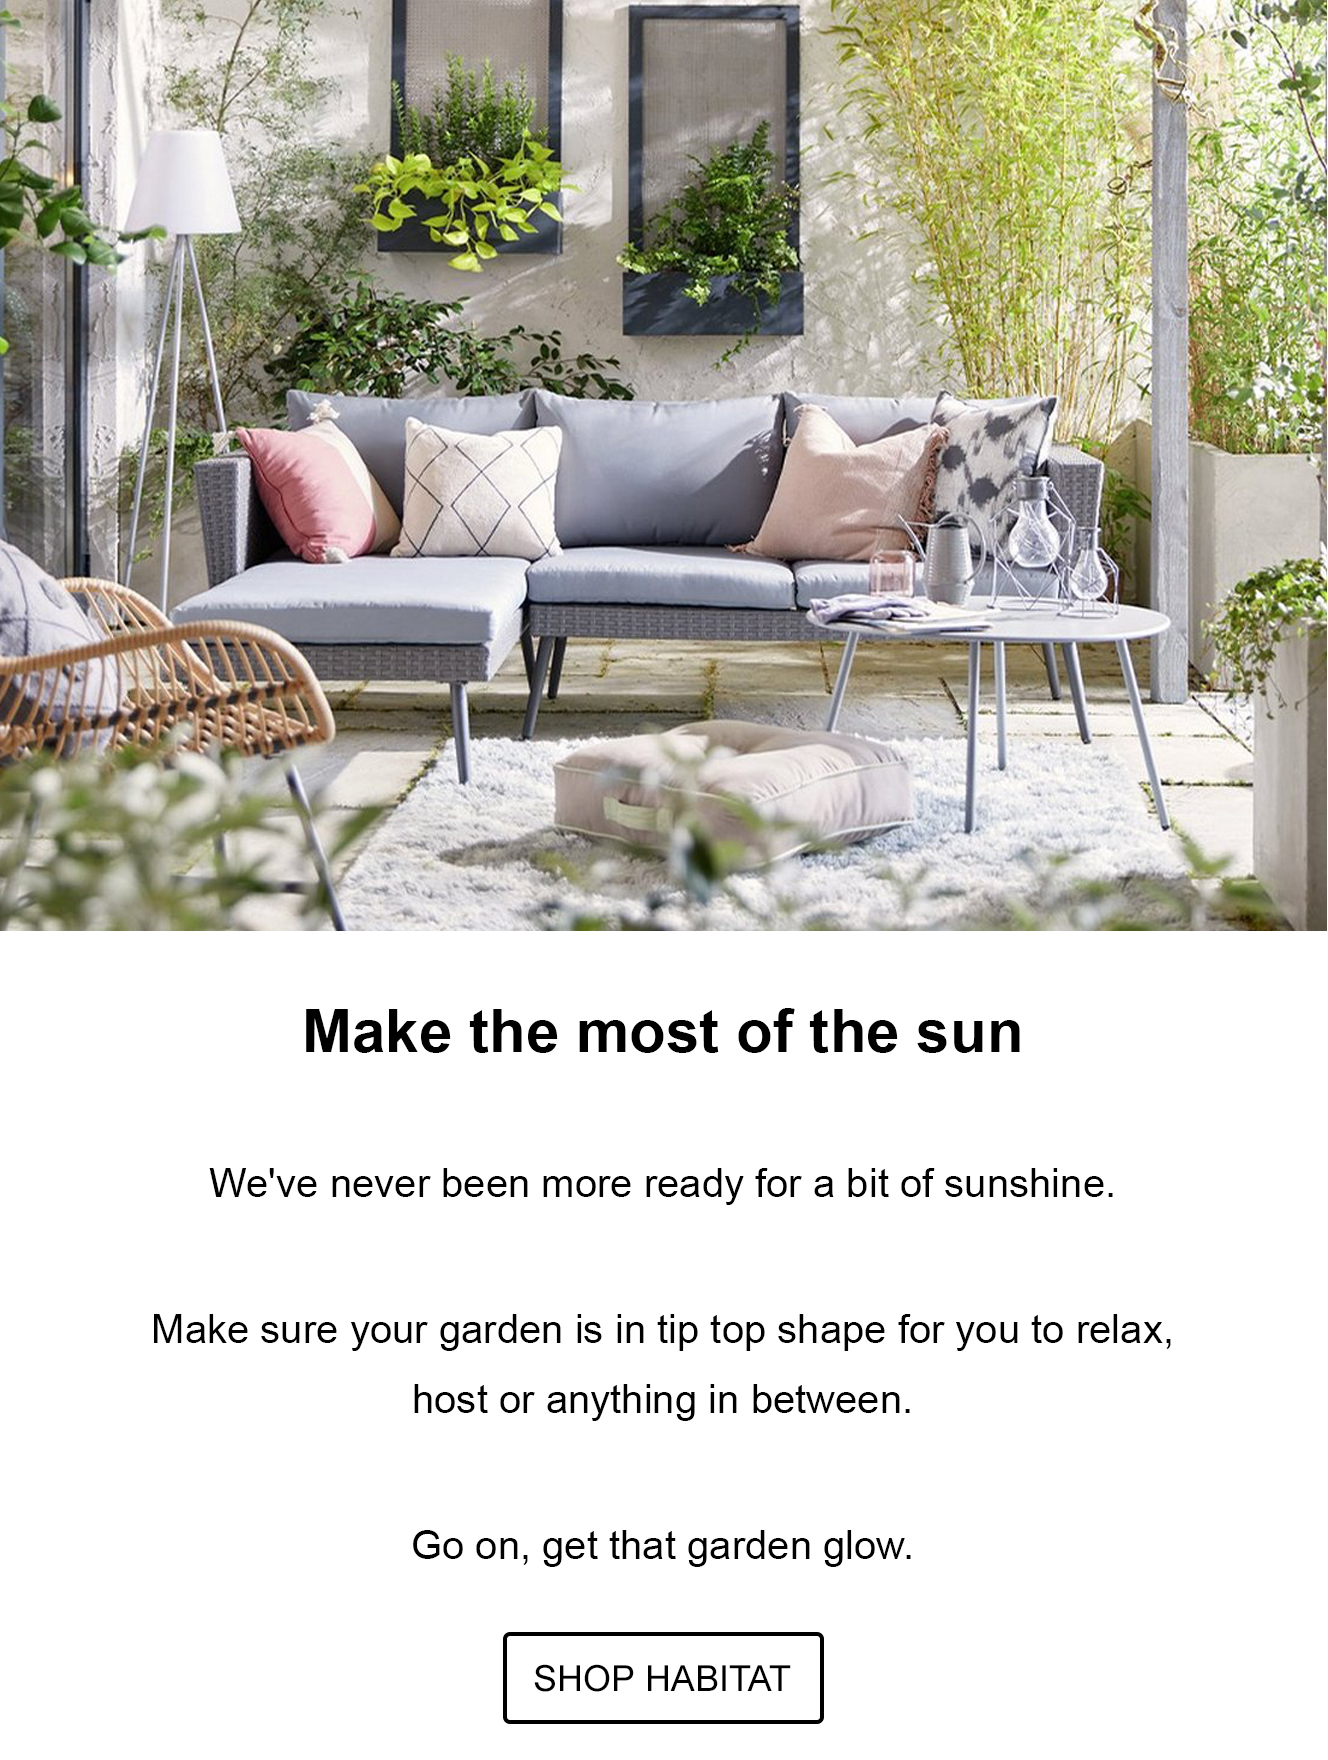 Make the most of the sun. Shop Habitat.